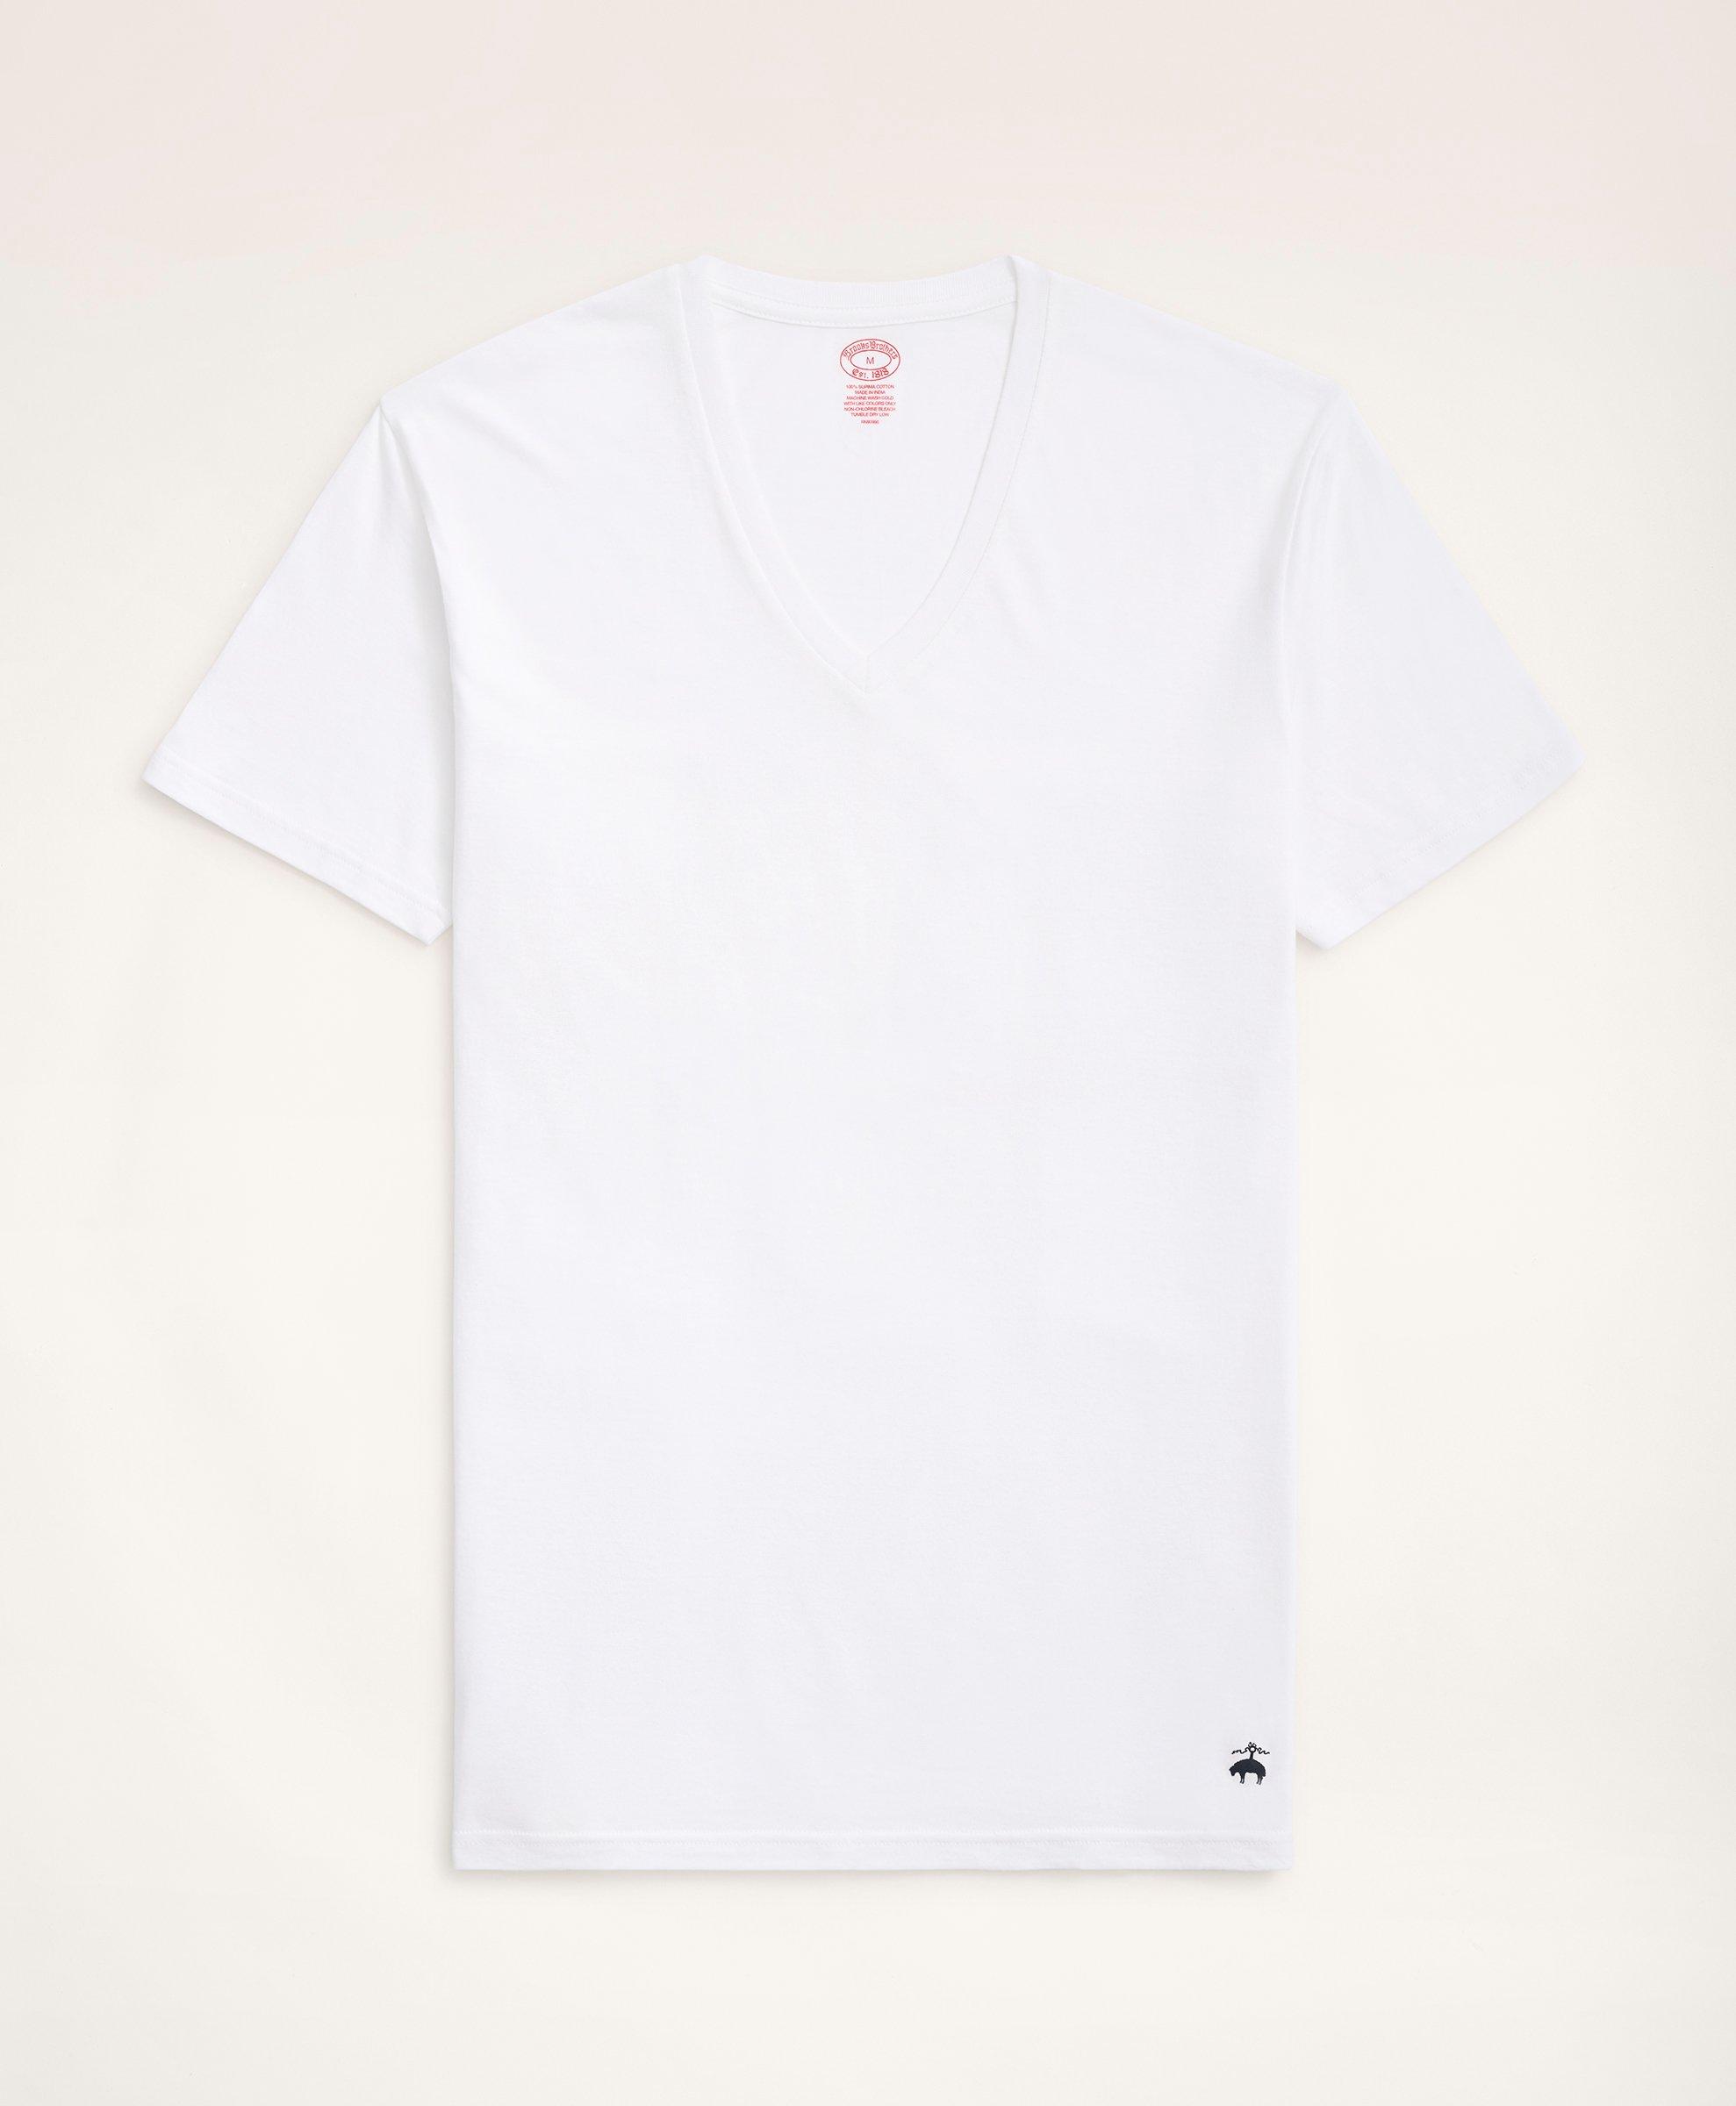 White Undershirts | Brooks Brothers